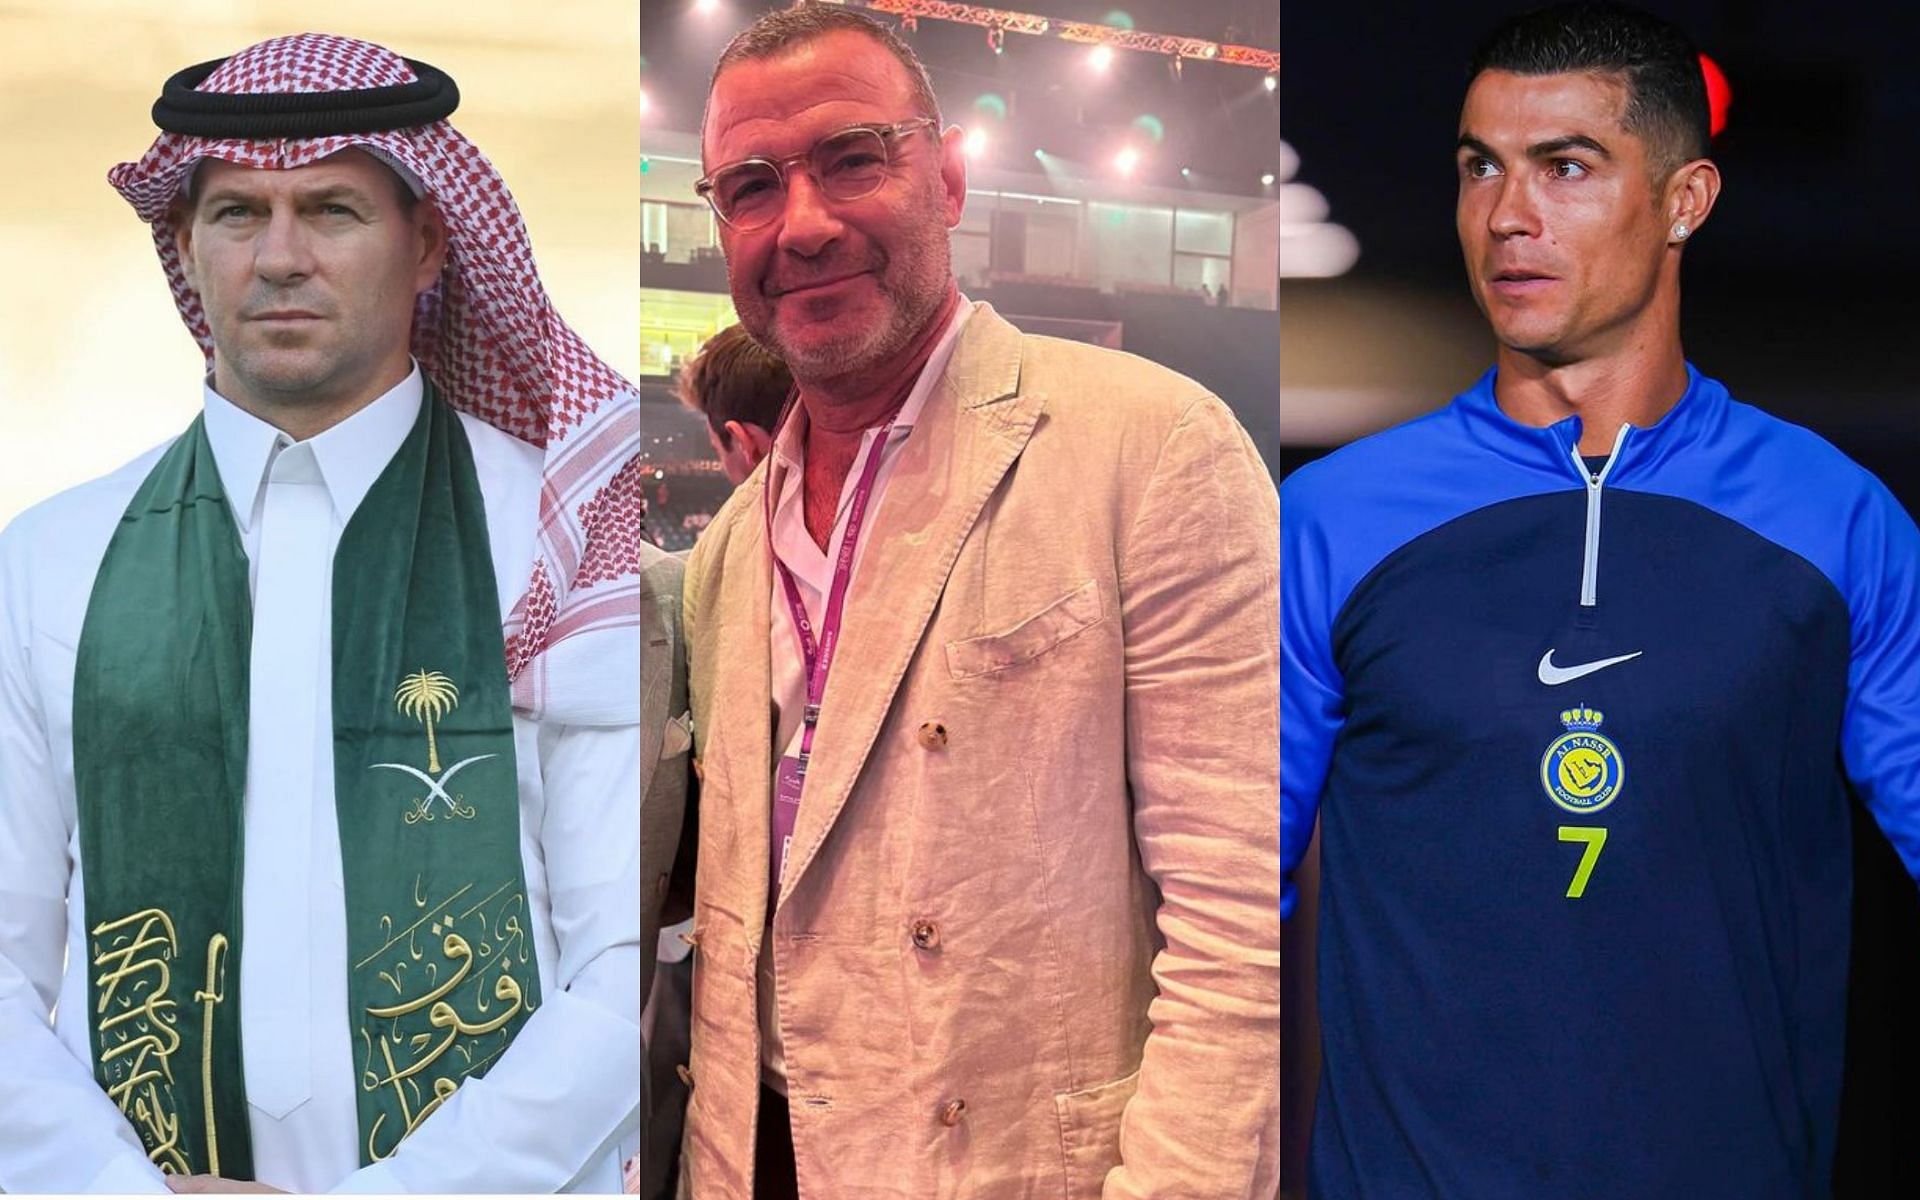 Steven Gerrard, Liev Schreiber, and Cristiano Ronaldo join star-studded crowd in Riyadh for Fury vs